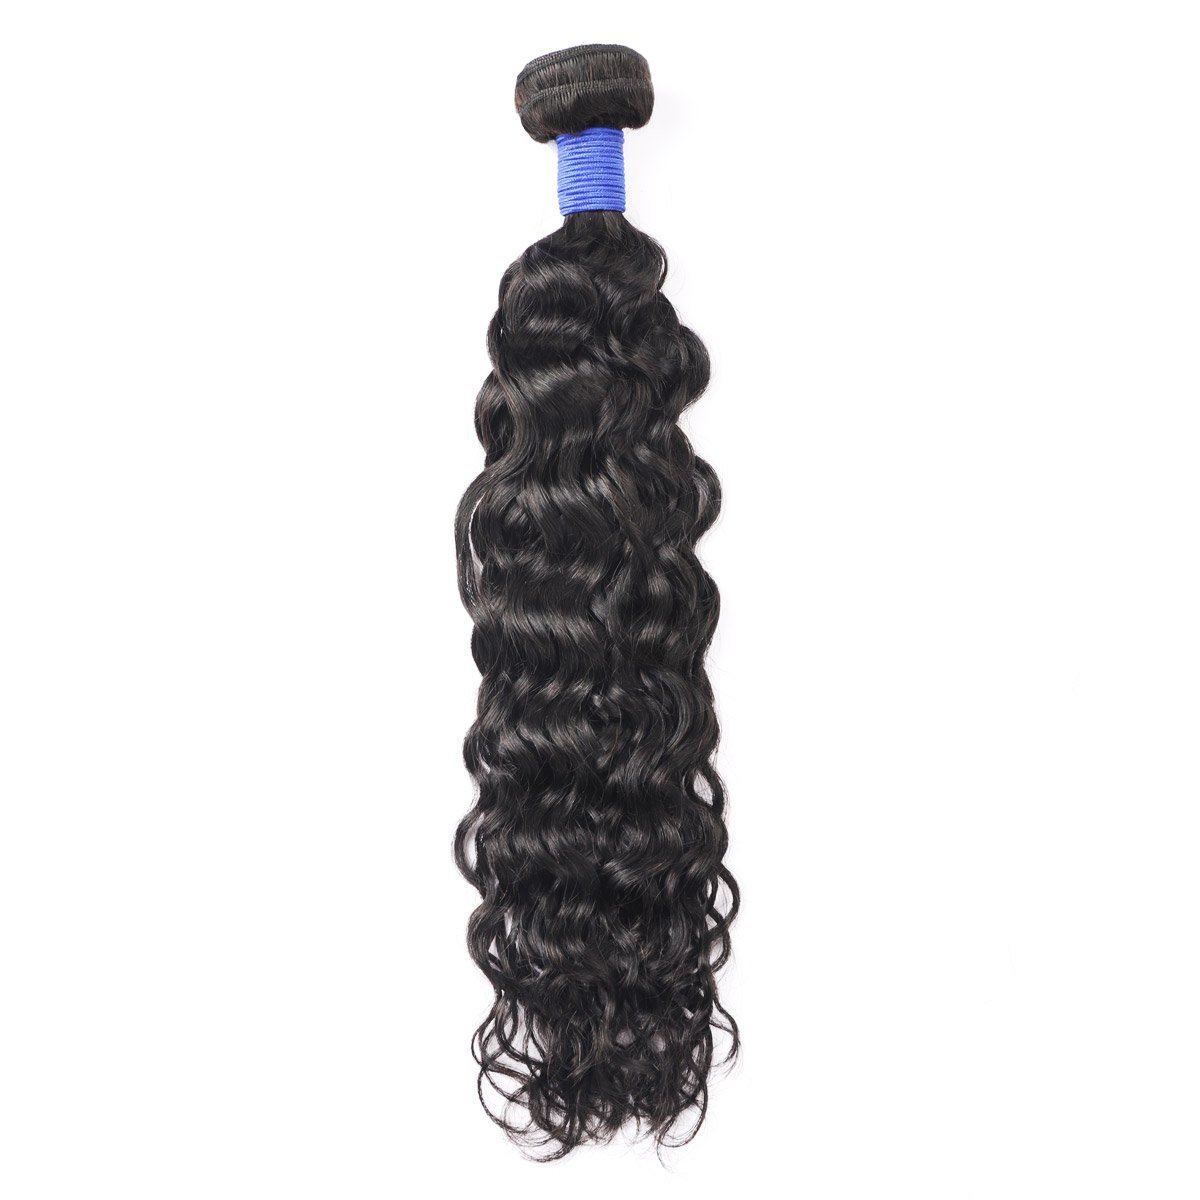 Water Wave Remy Human Hair Bundle (Hair Weave) Wholesale